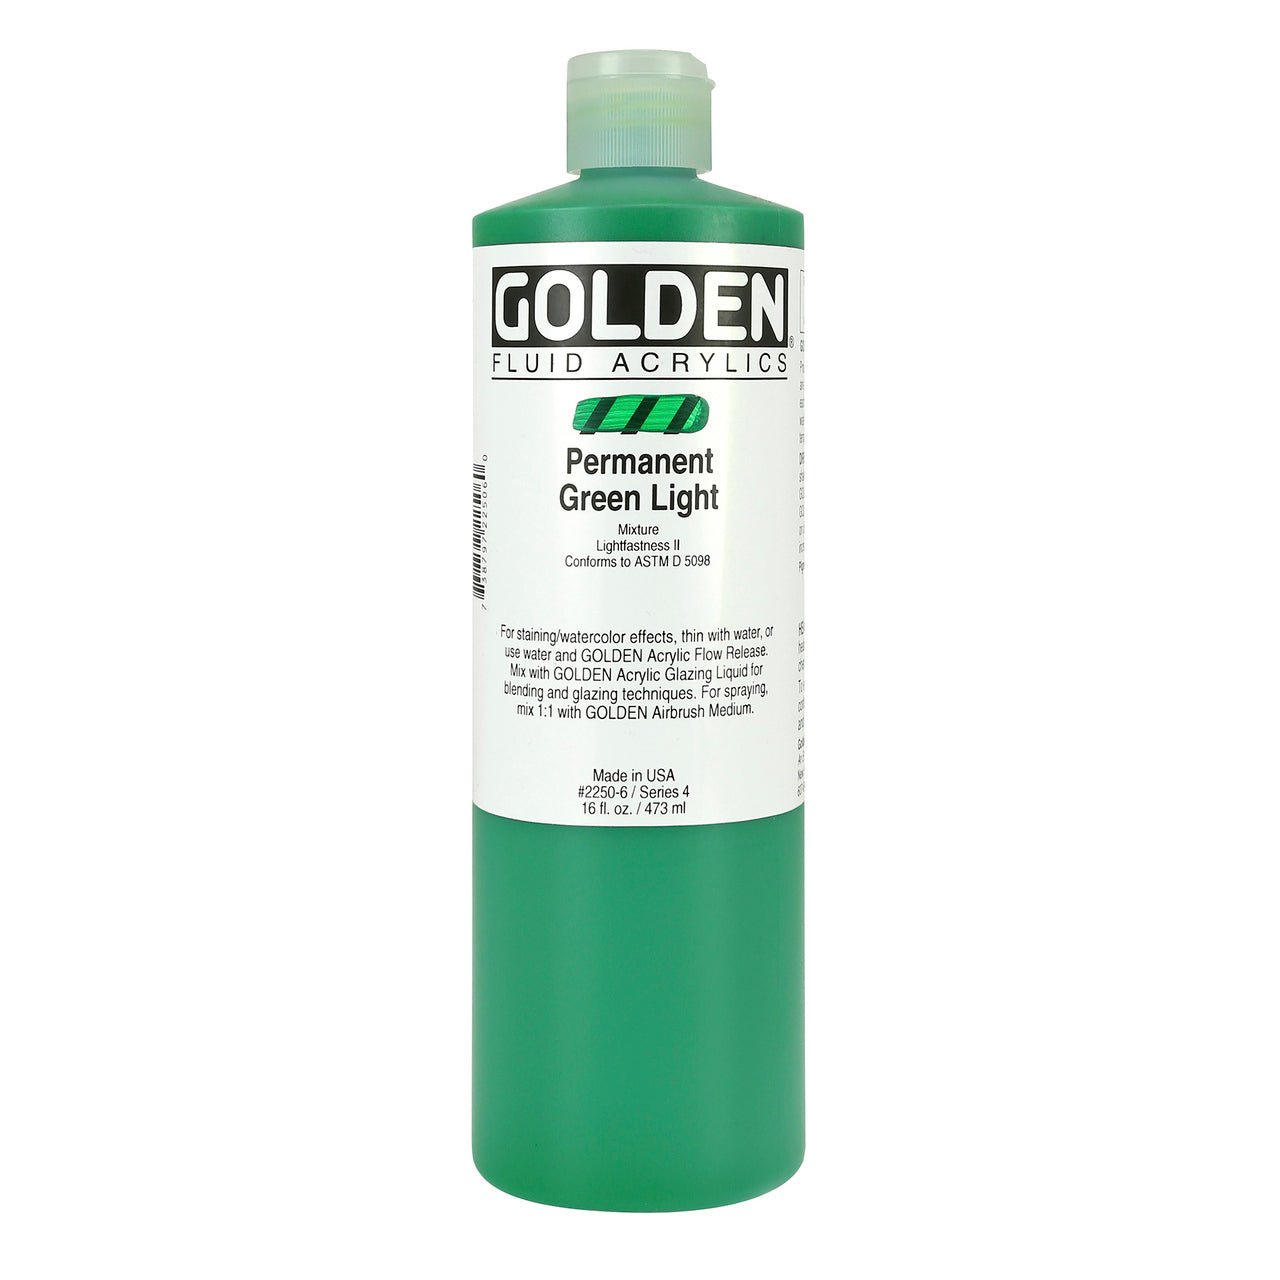 Golden Fluid Acrylic Permanent Green Light 16 oz - merriartist.com